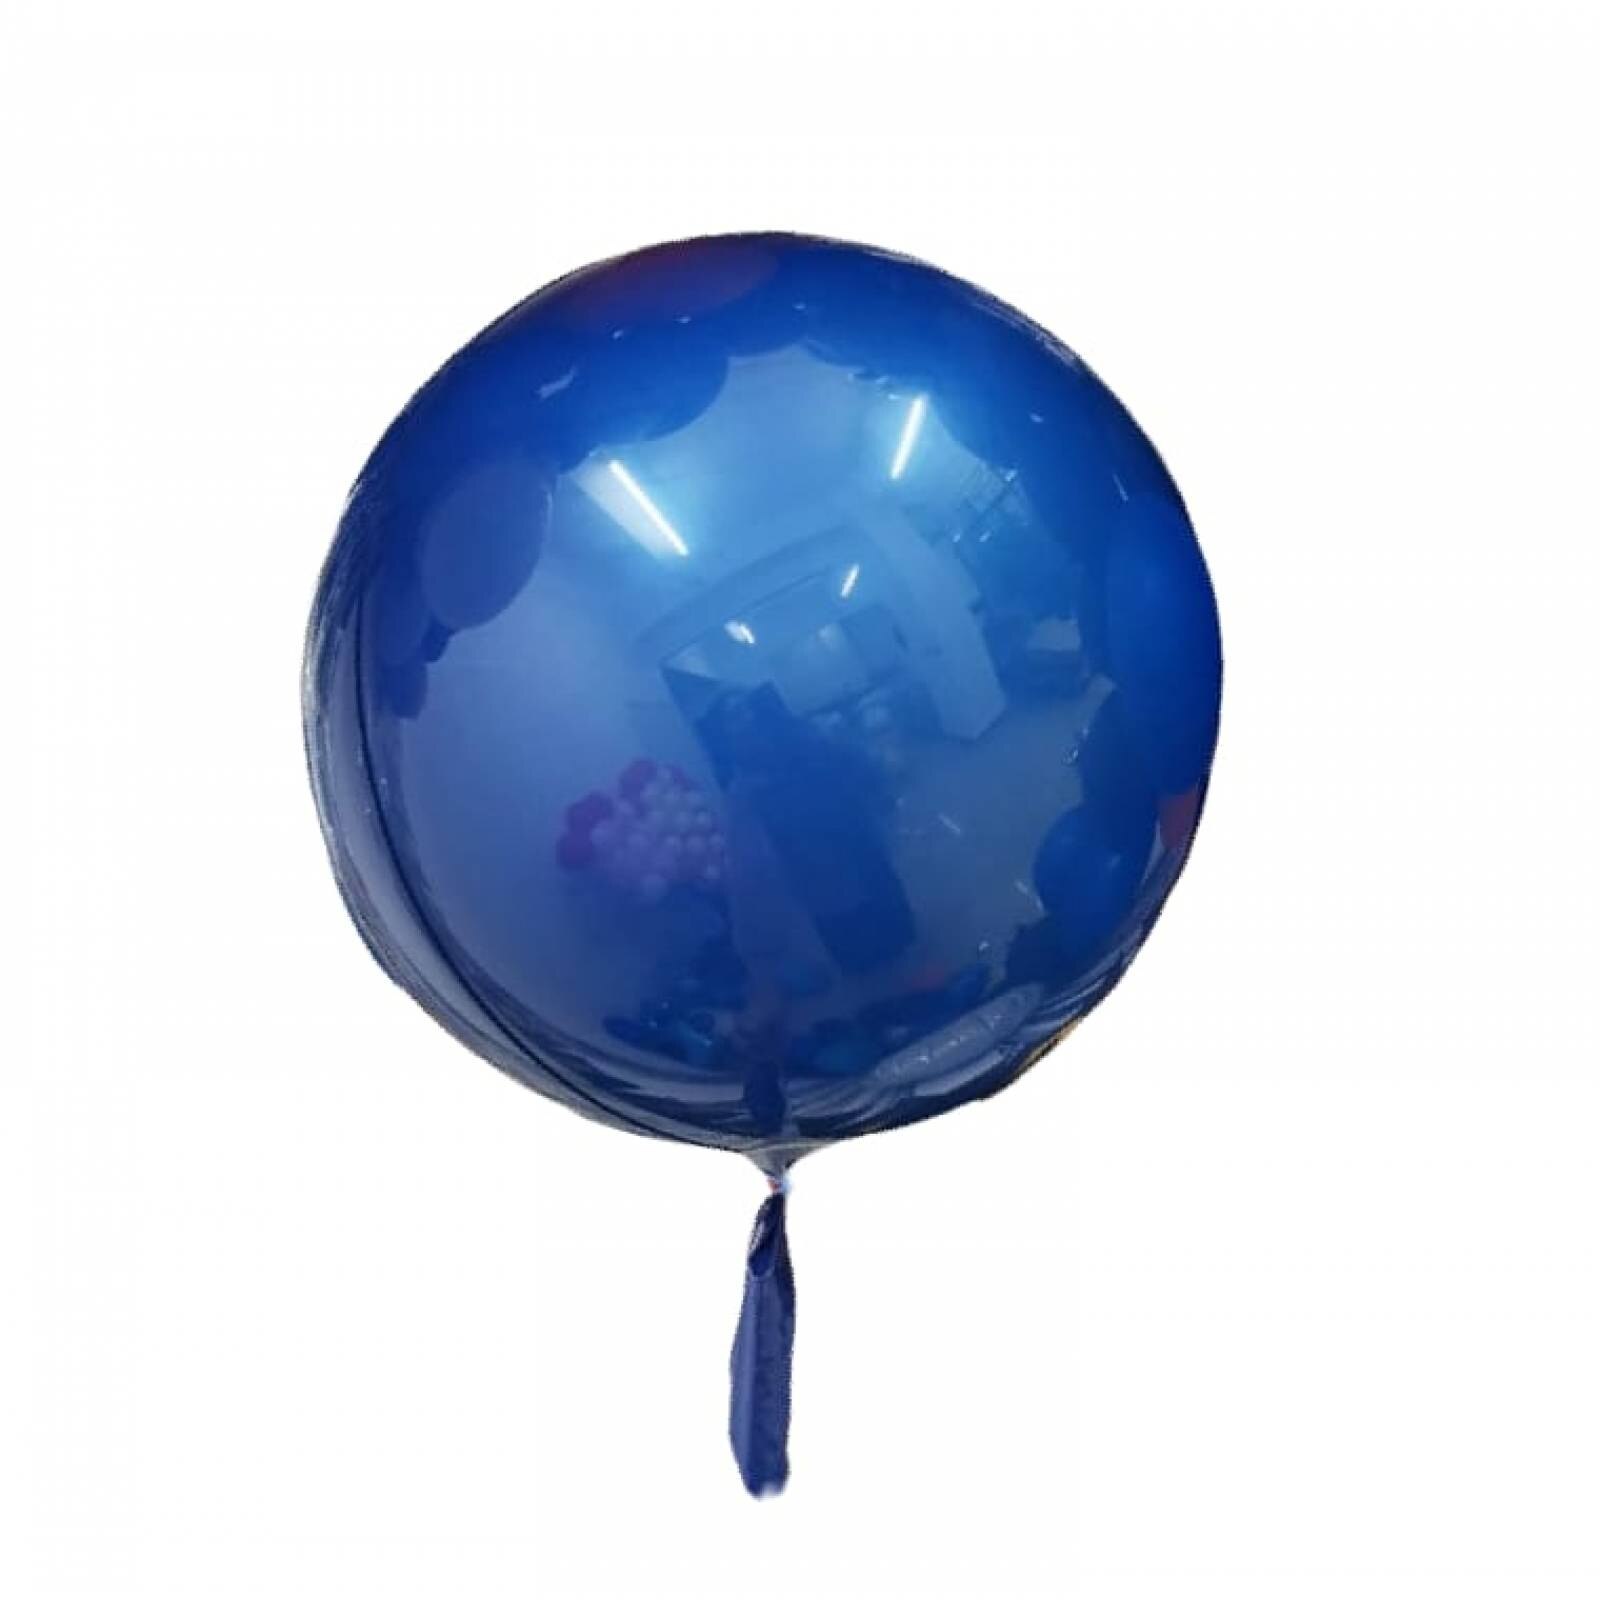 Globo gigante metálico esfera burbuja pvc de 24 pulgadas azul rey  - Sears